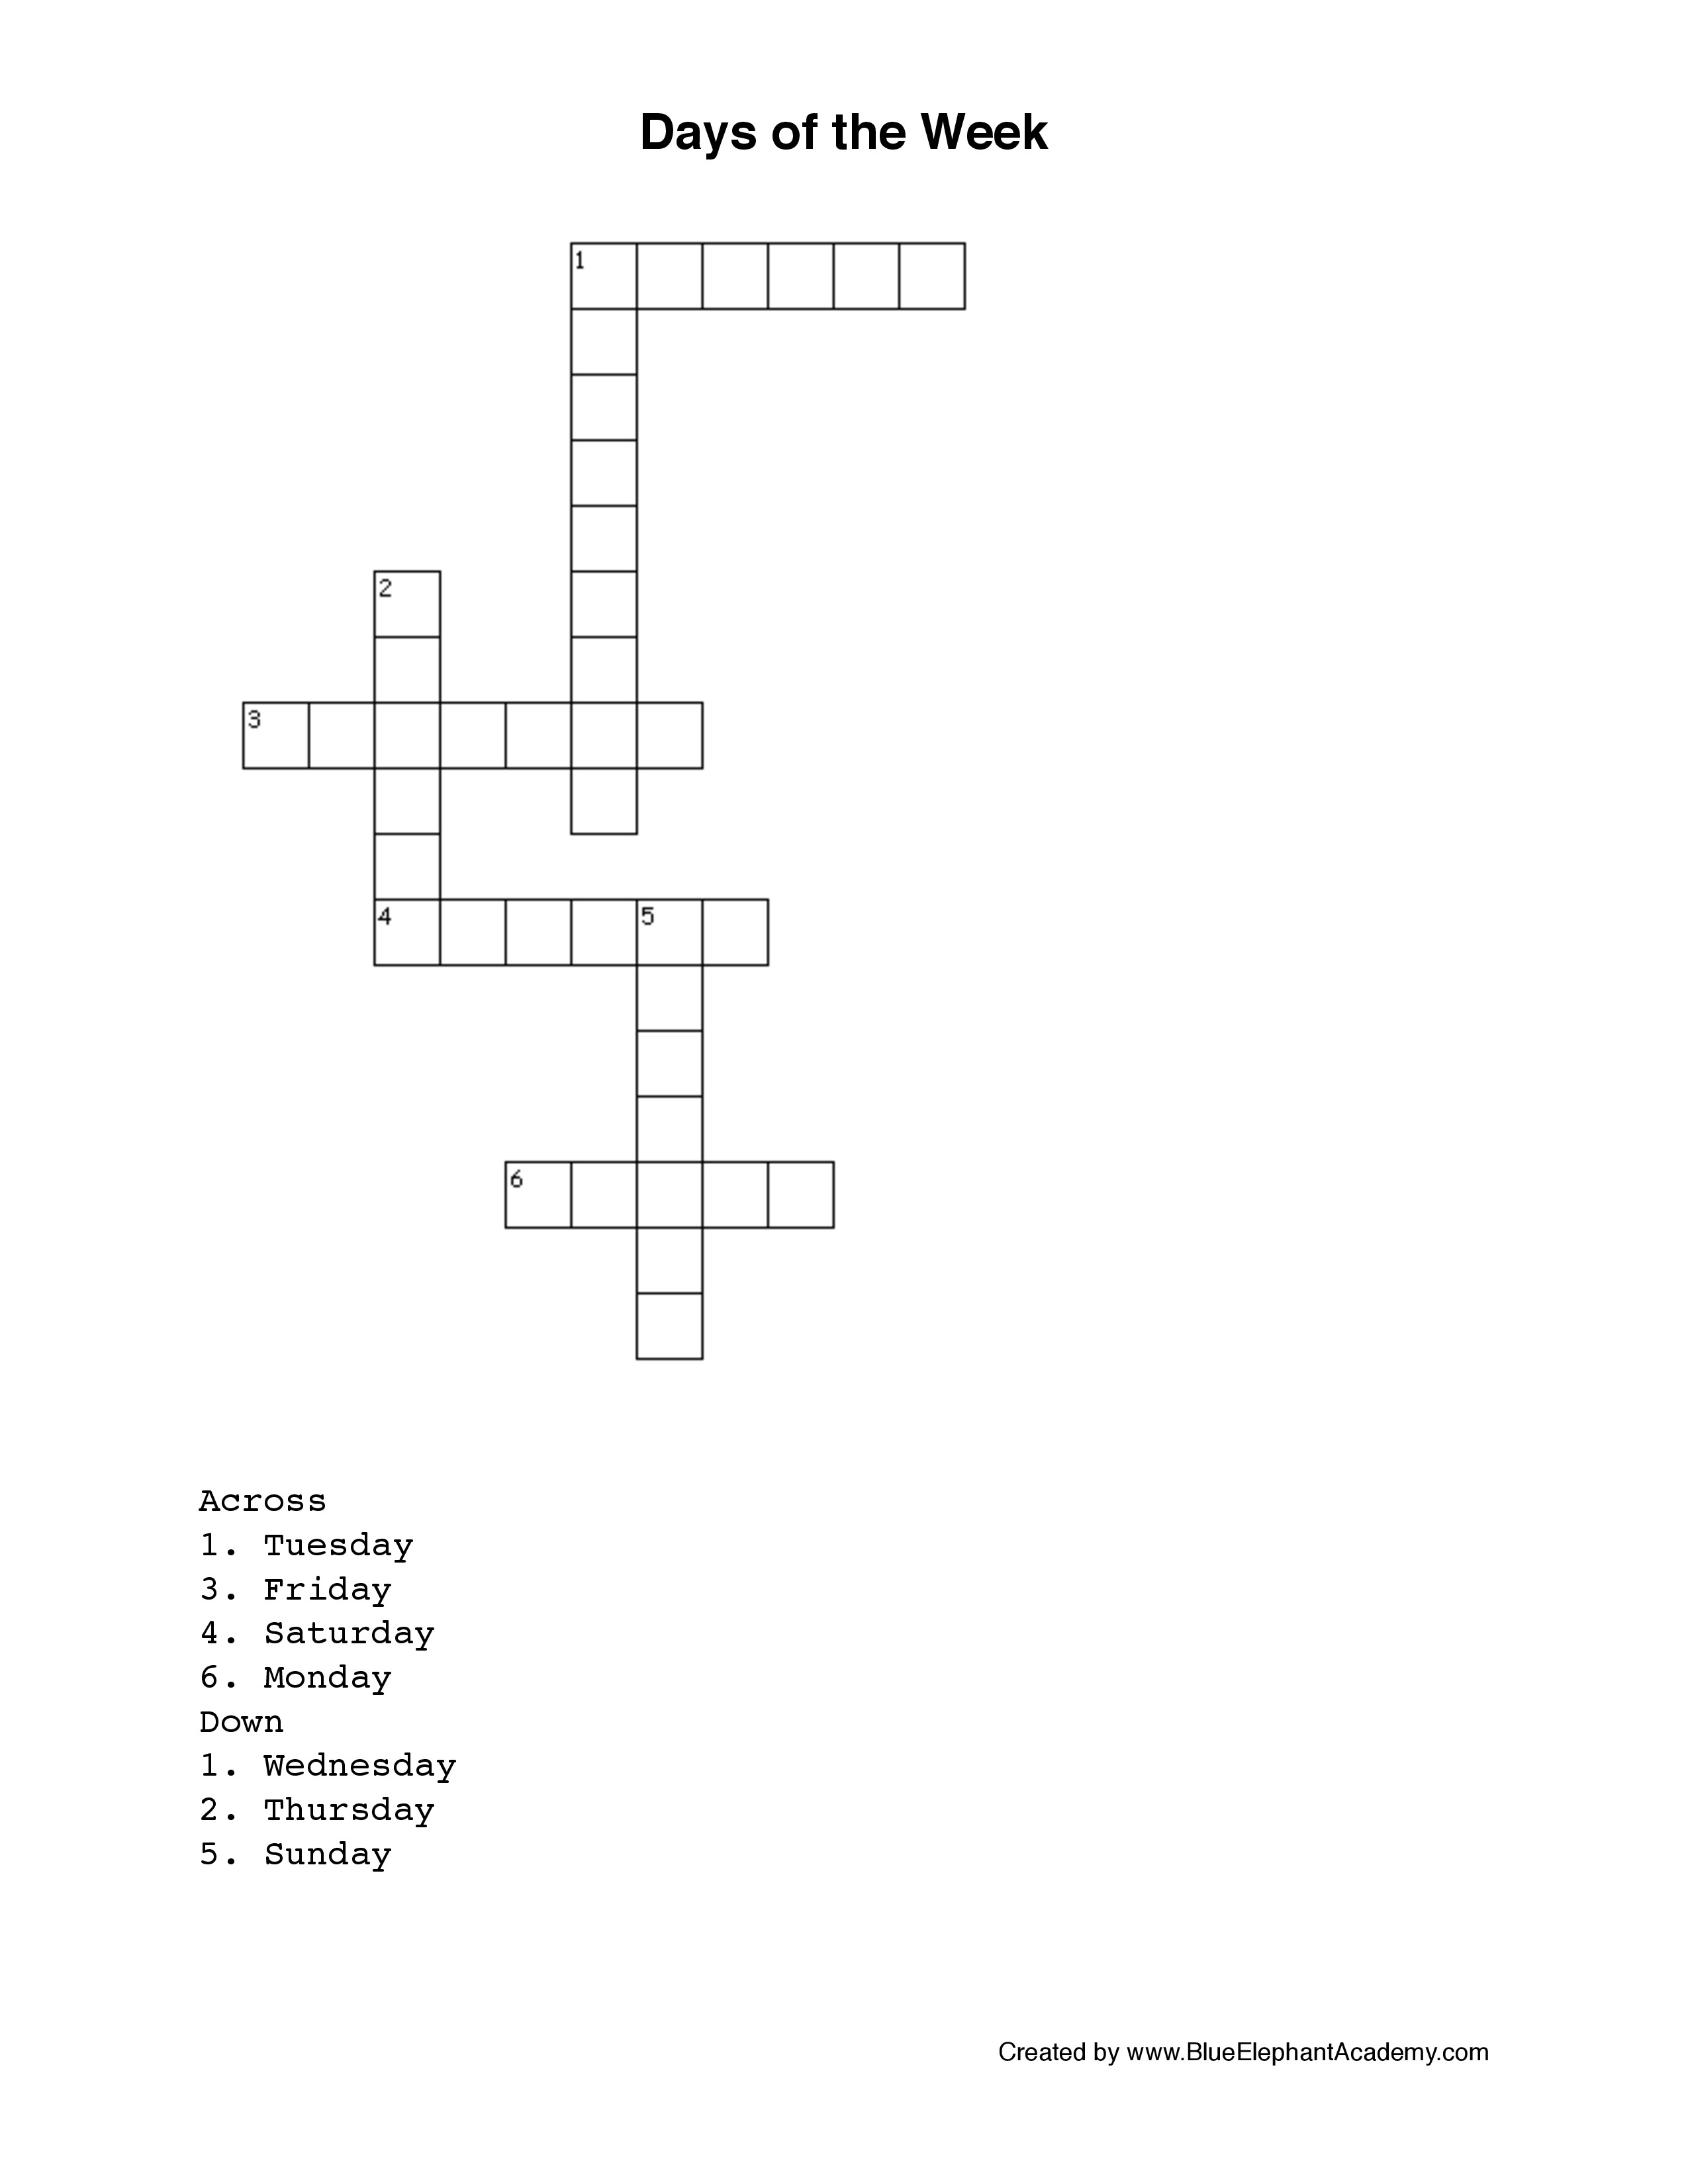 Spanish Crossword Puzzle Week Image